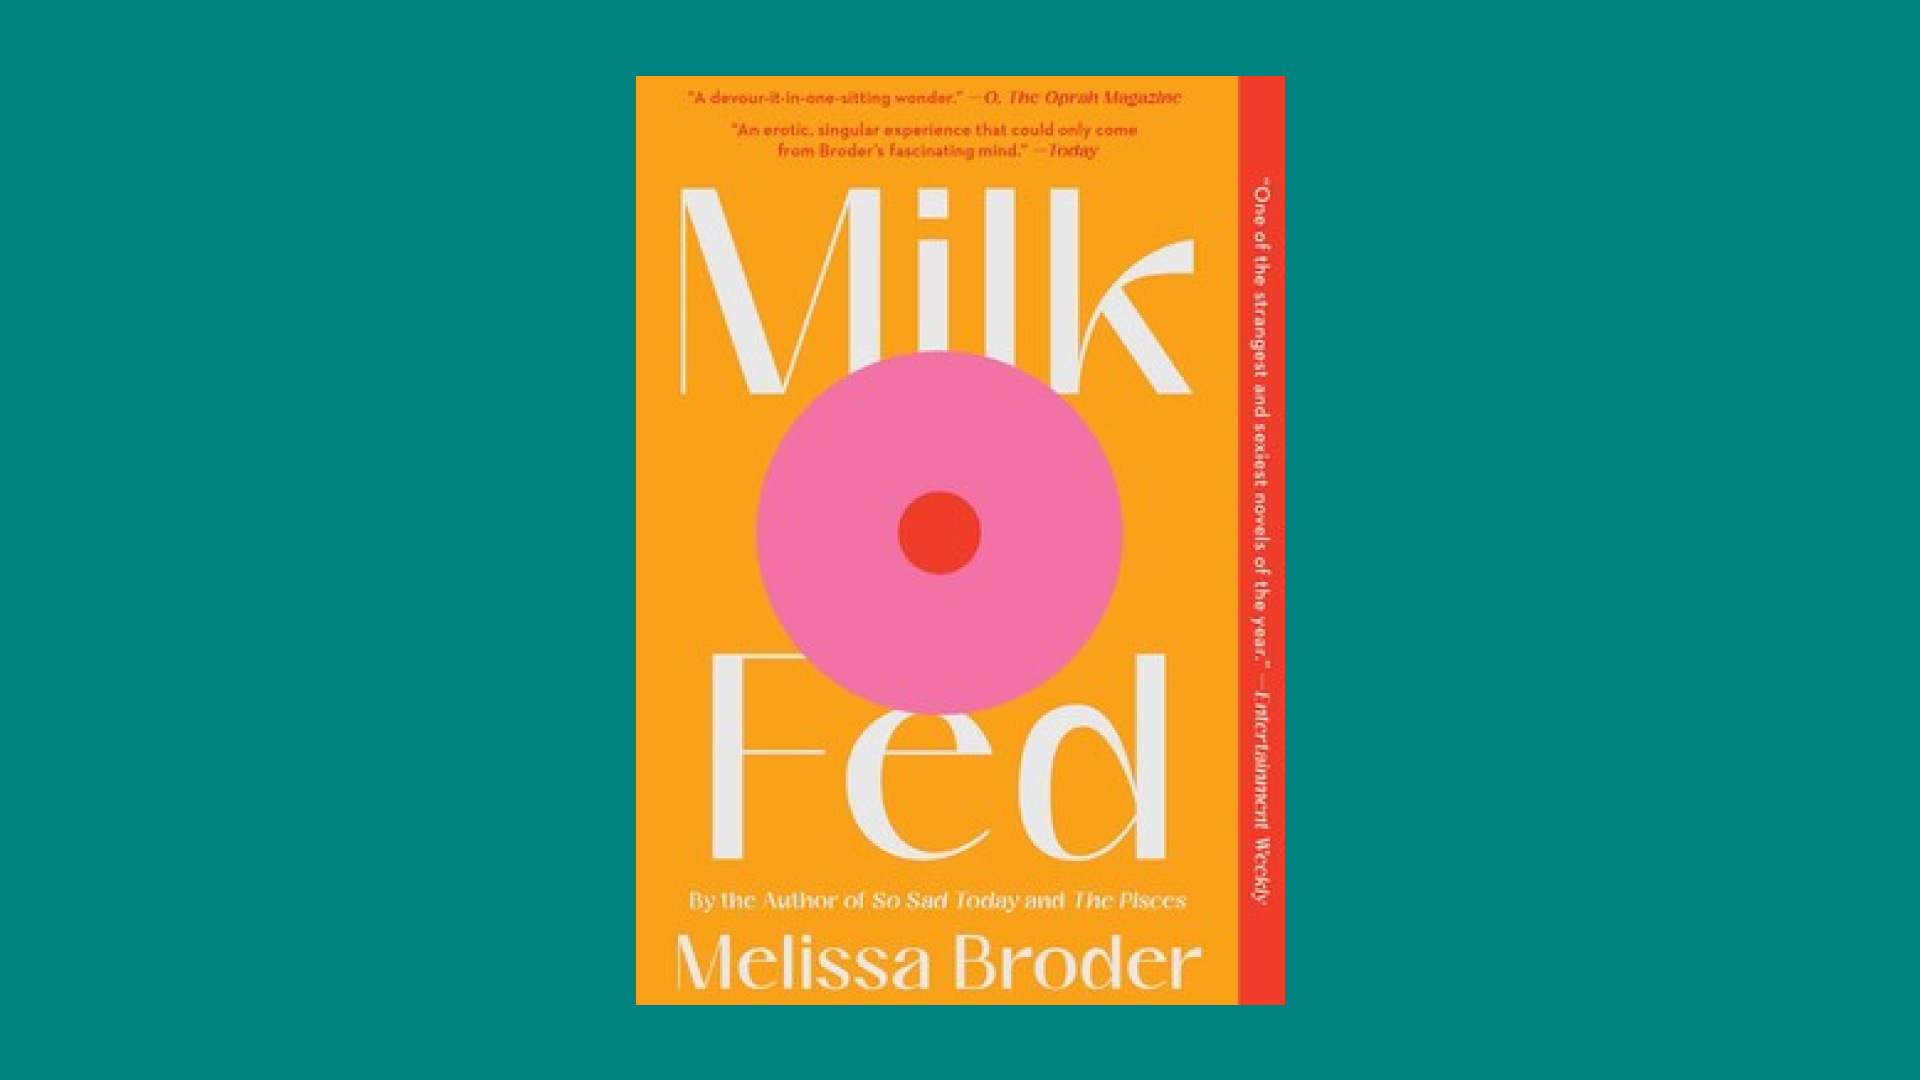 “Milk Fed” by Melissa Broder 